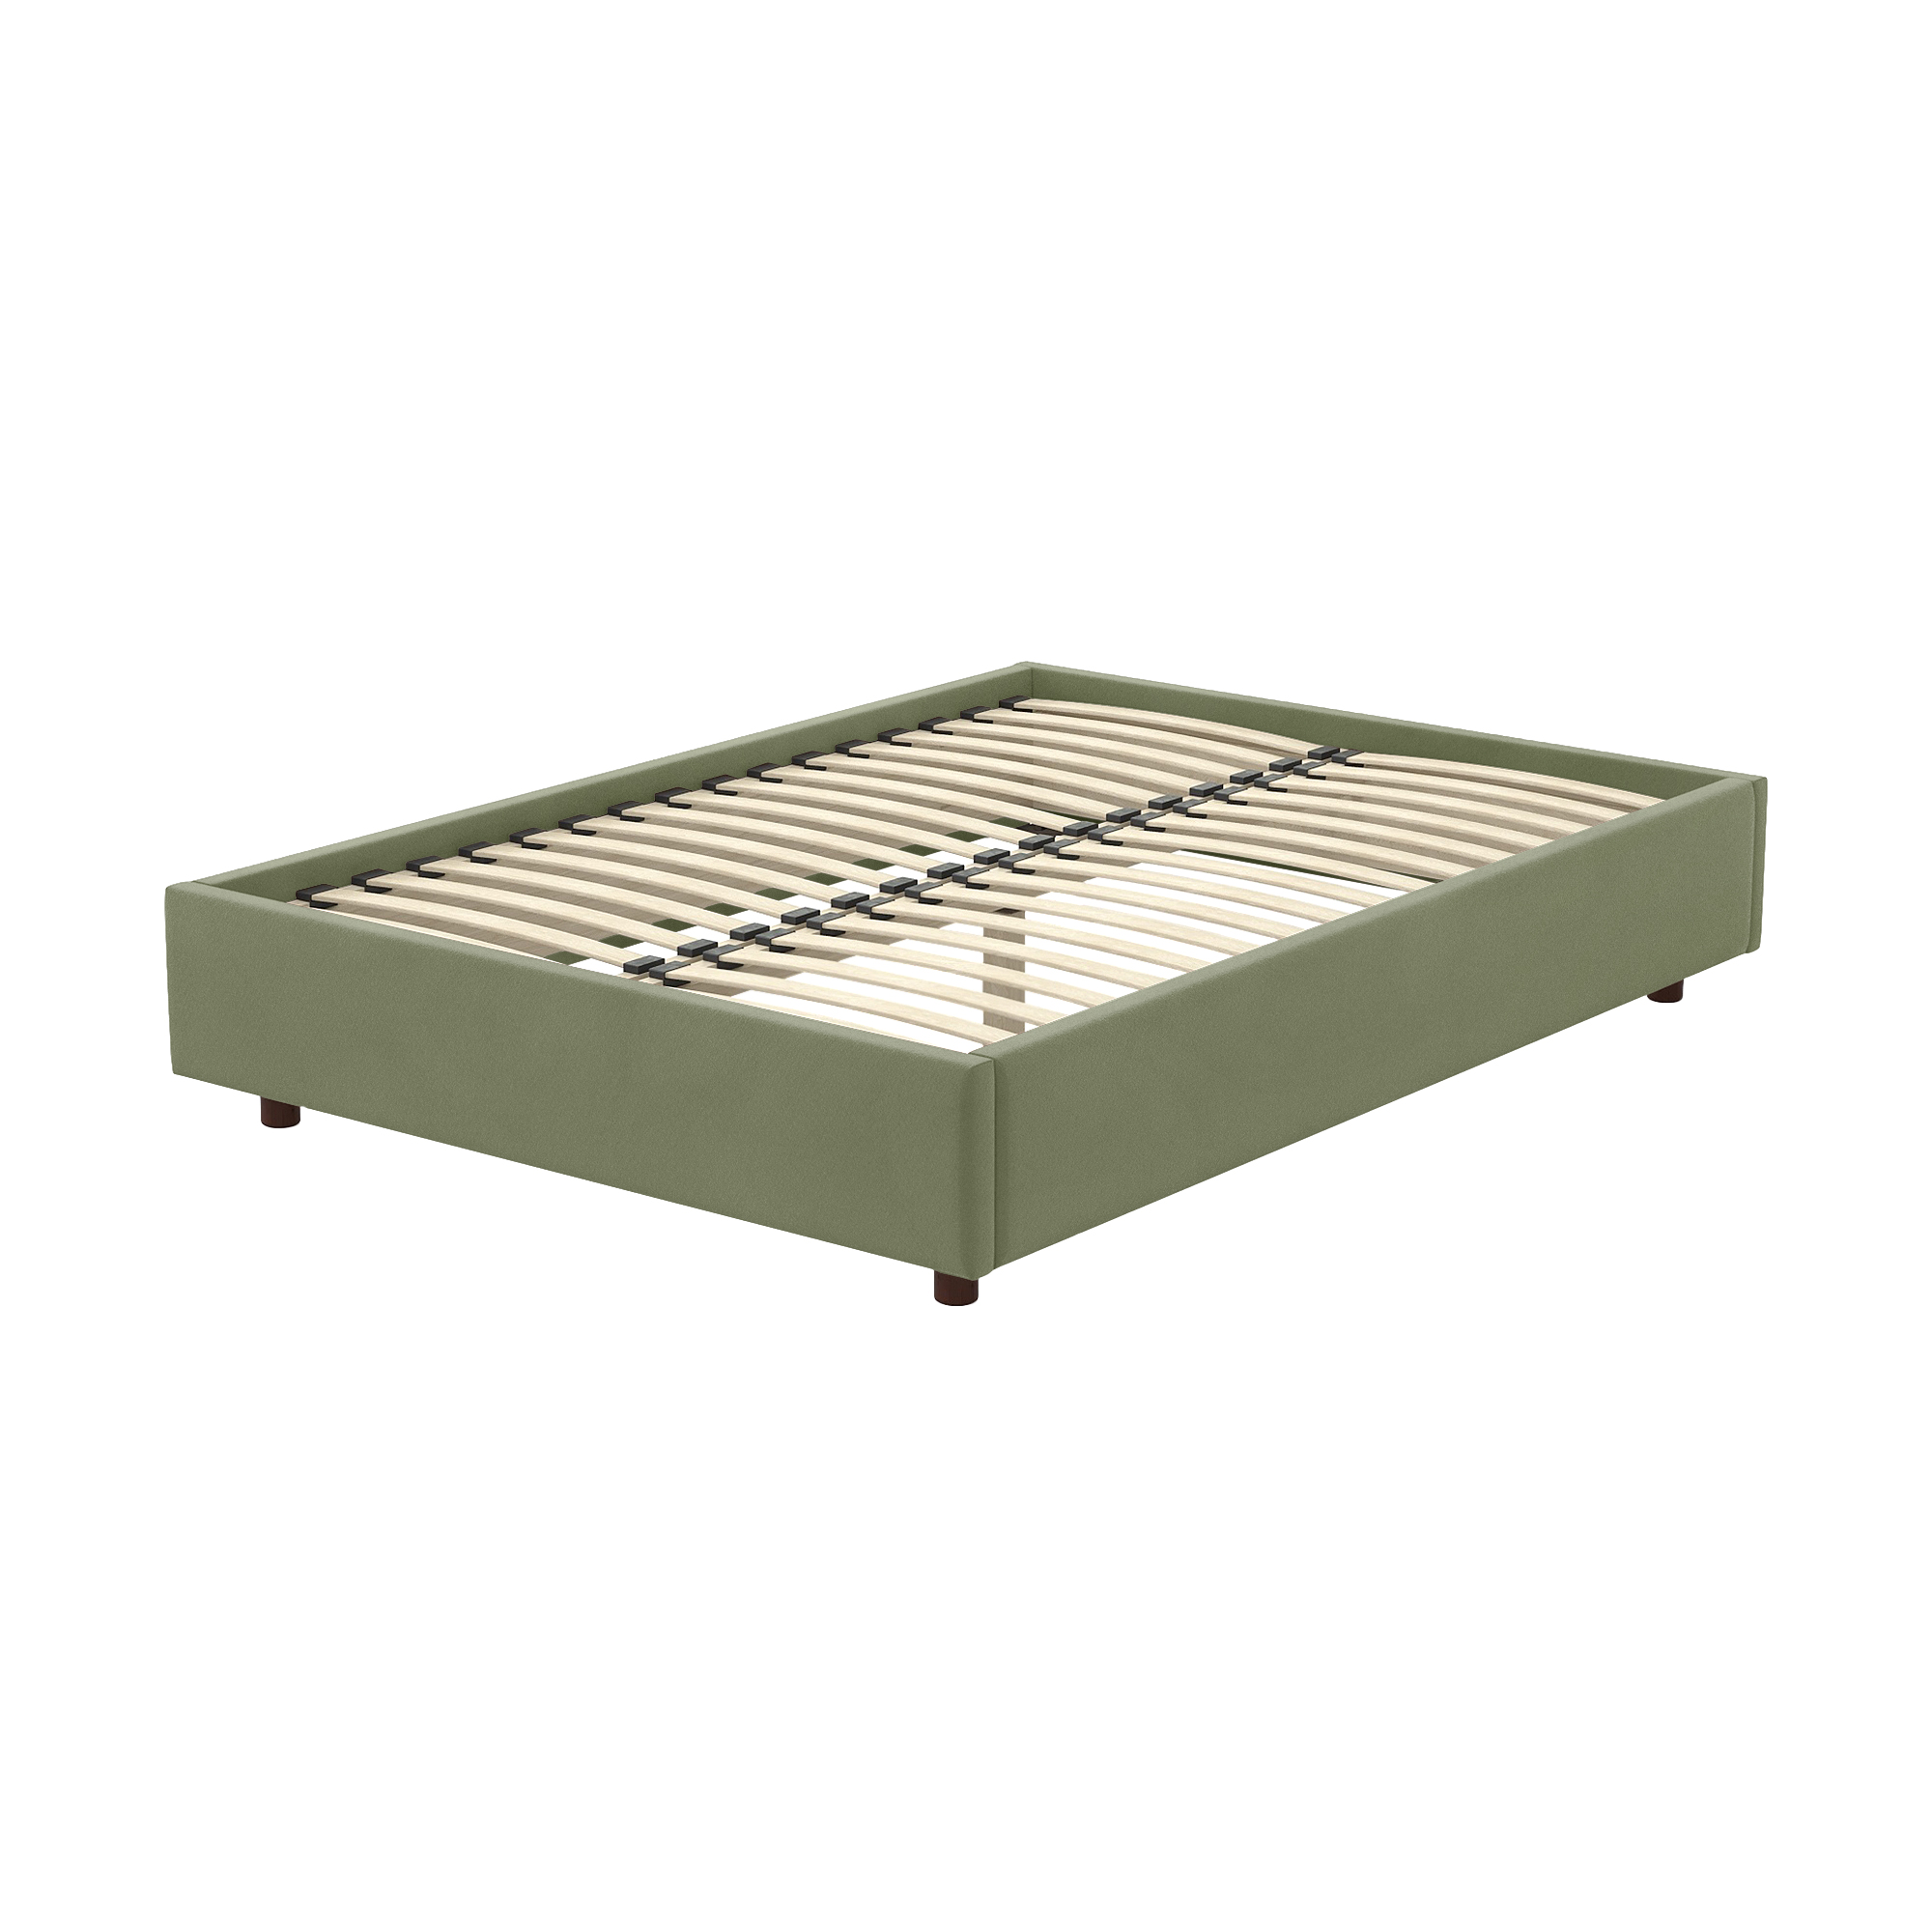 Кровать AS Саманта 160x200 орех/грасс, цвет зеленый, размер 200х160х30 - фото 1